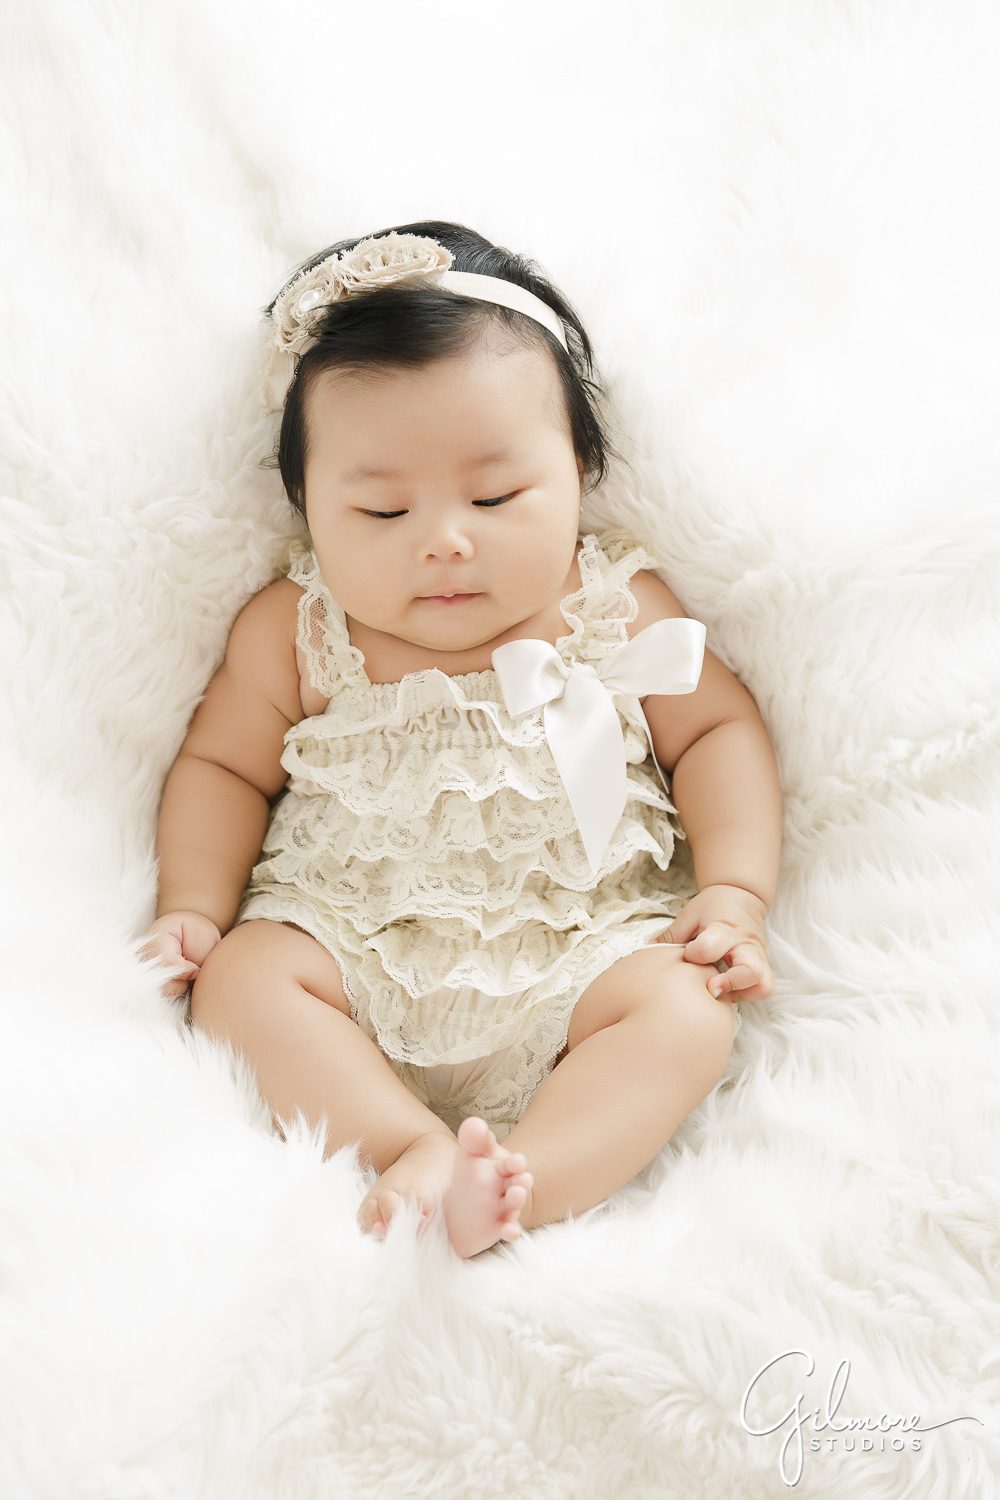 100 Days Baby Photography Session, sleeping, newborn, portraits, ribbon, lace headband, dress, white blanket